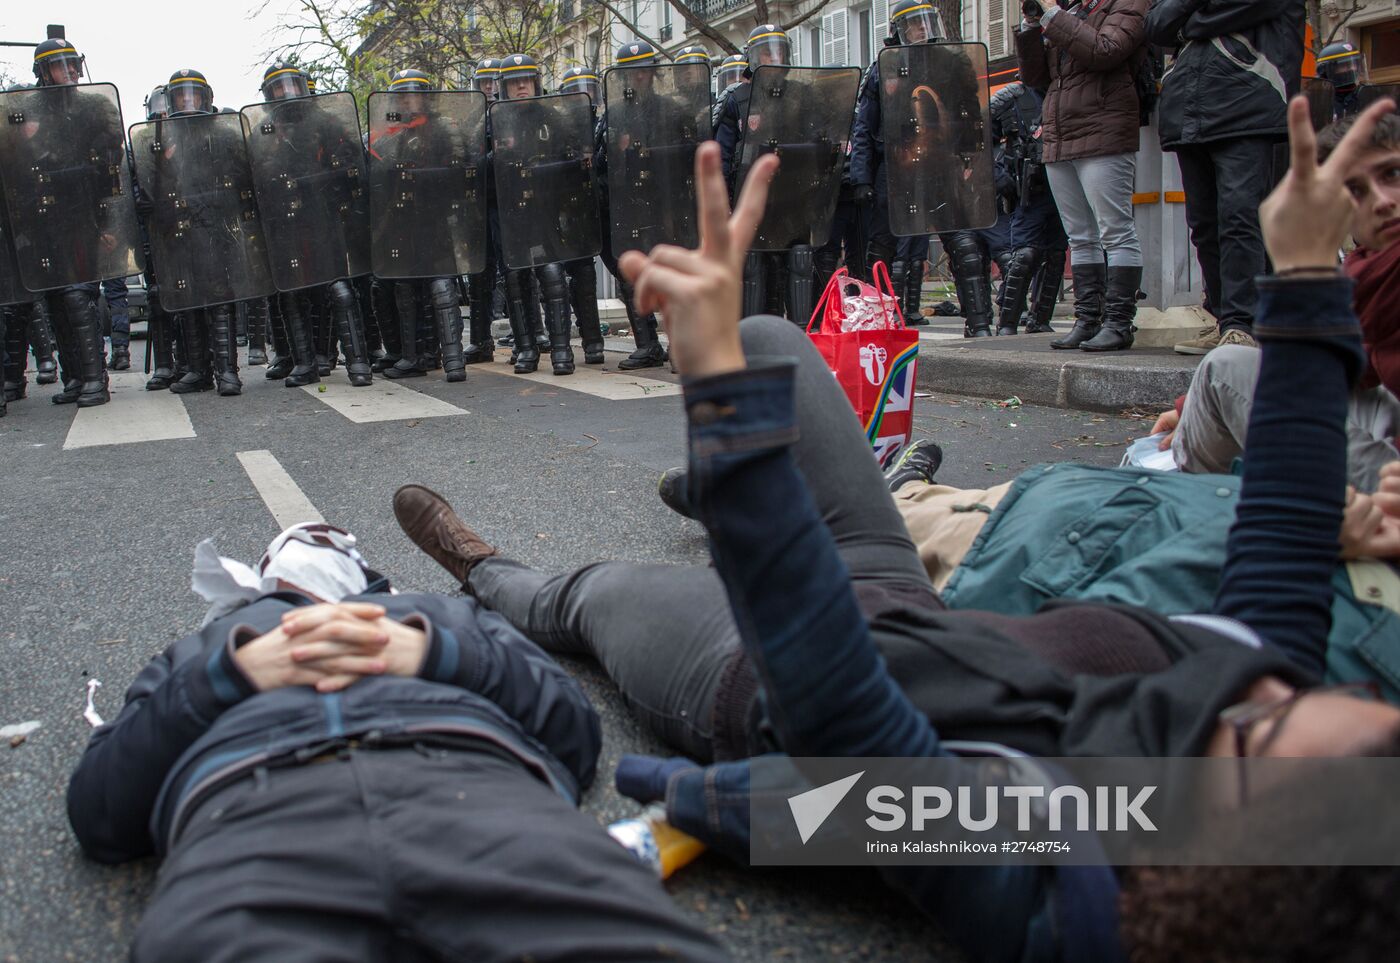 Unrest during environmental rallies in Paris